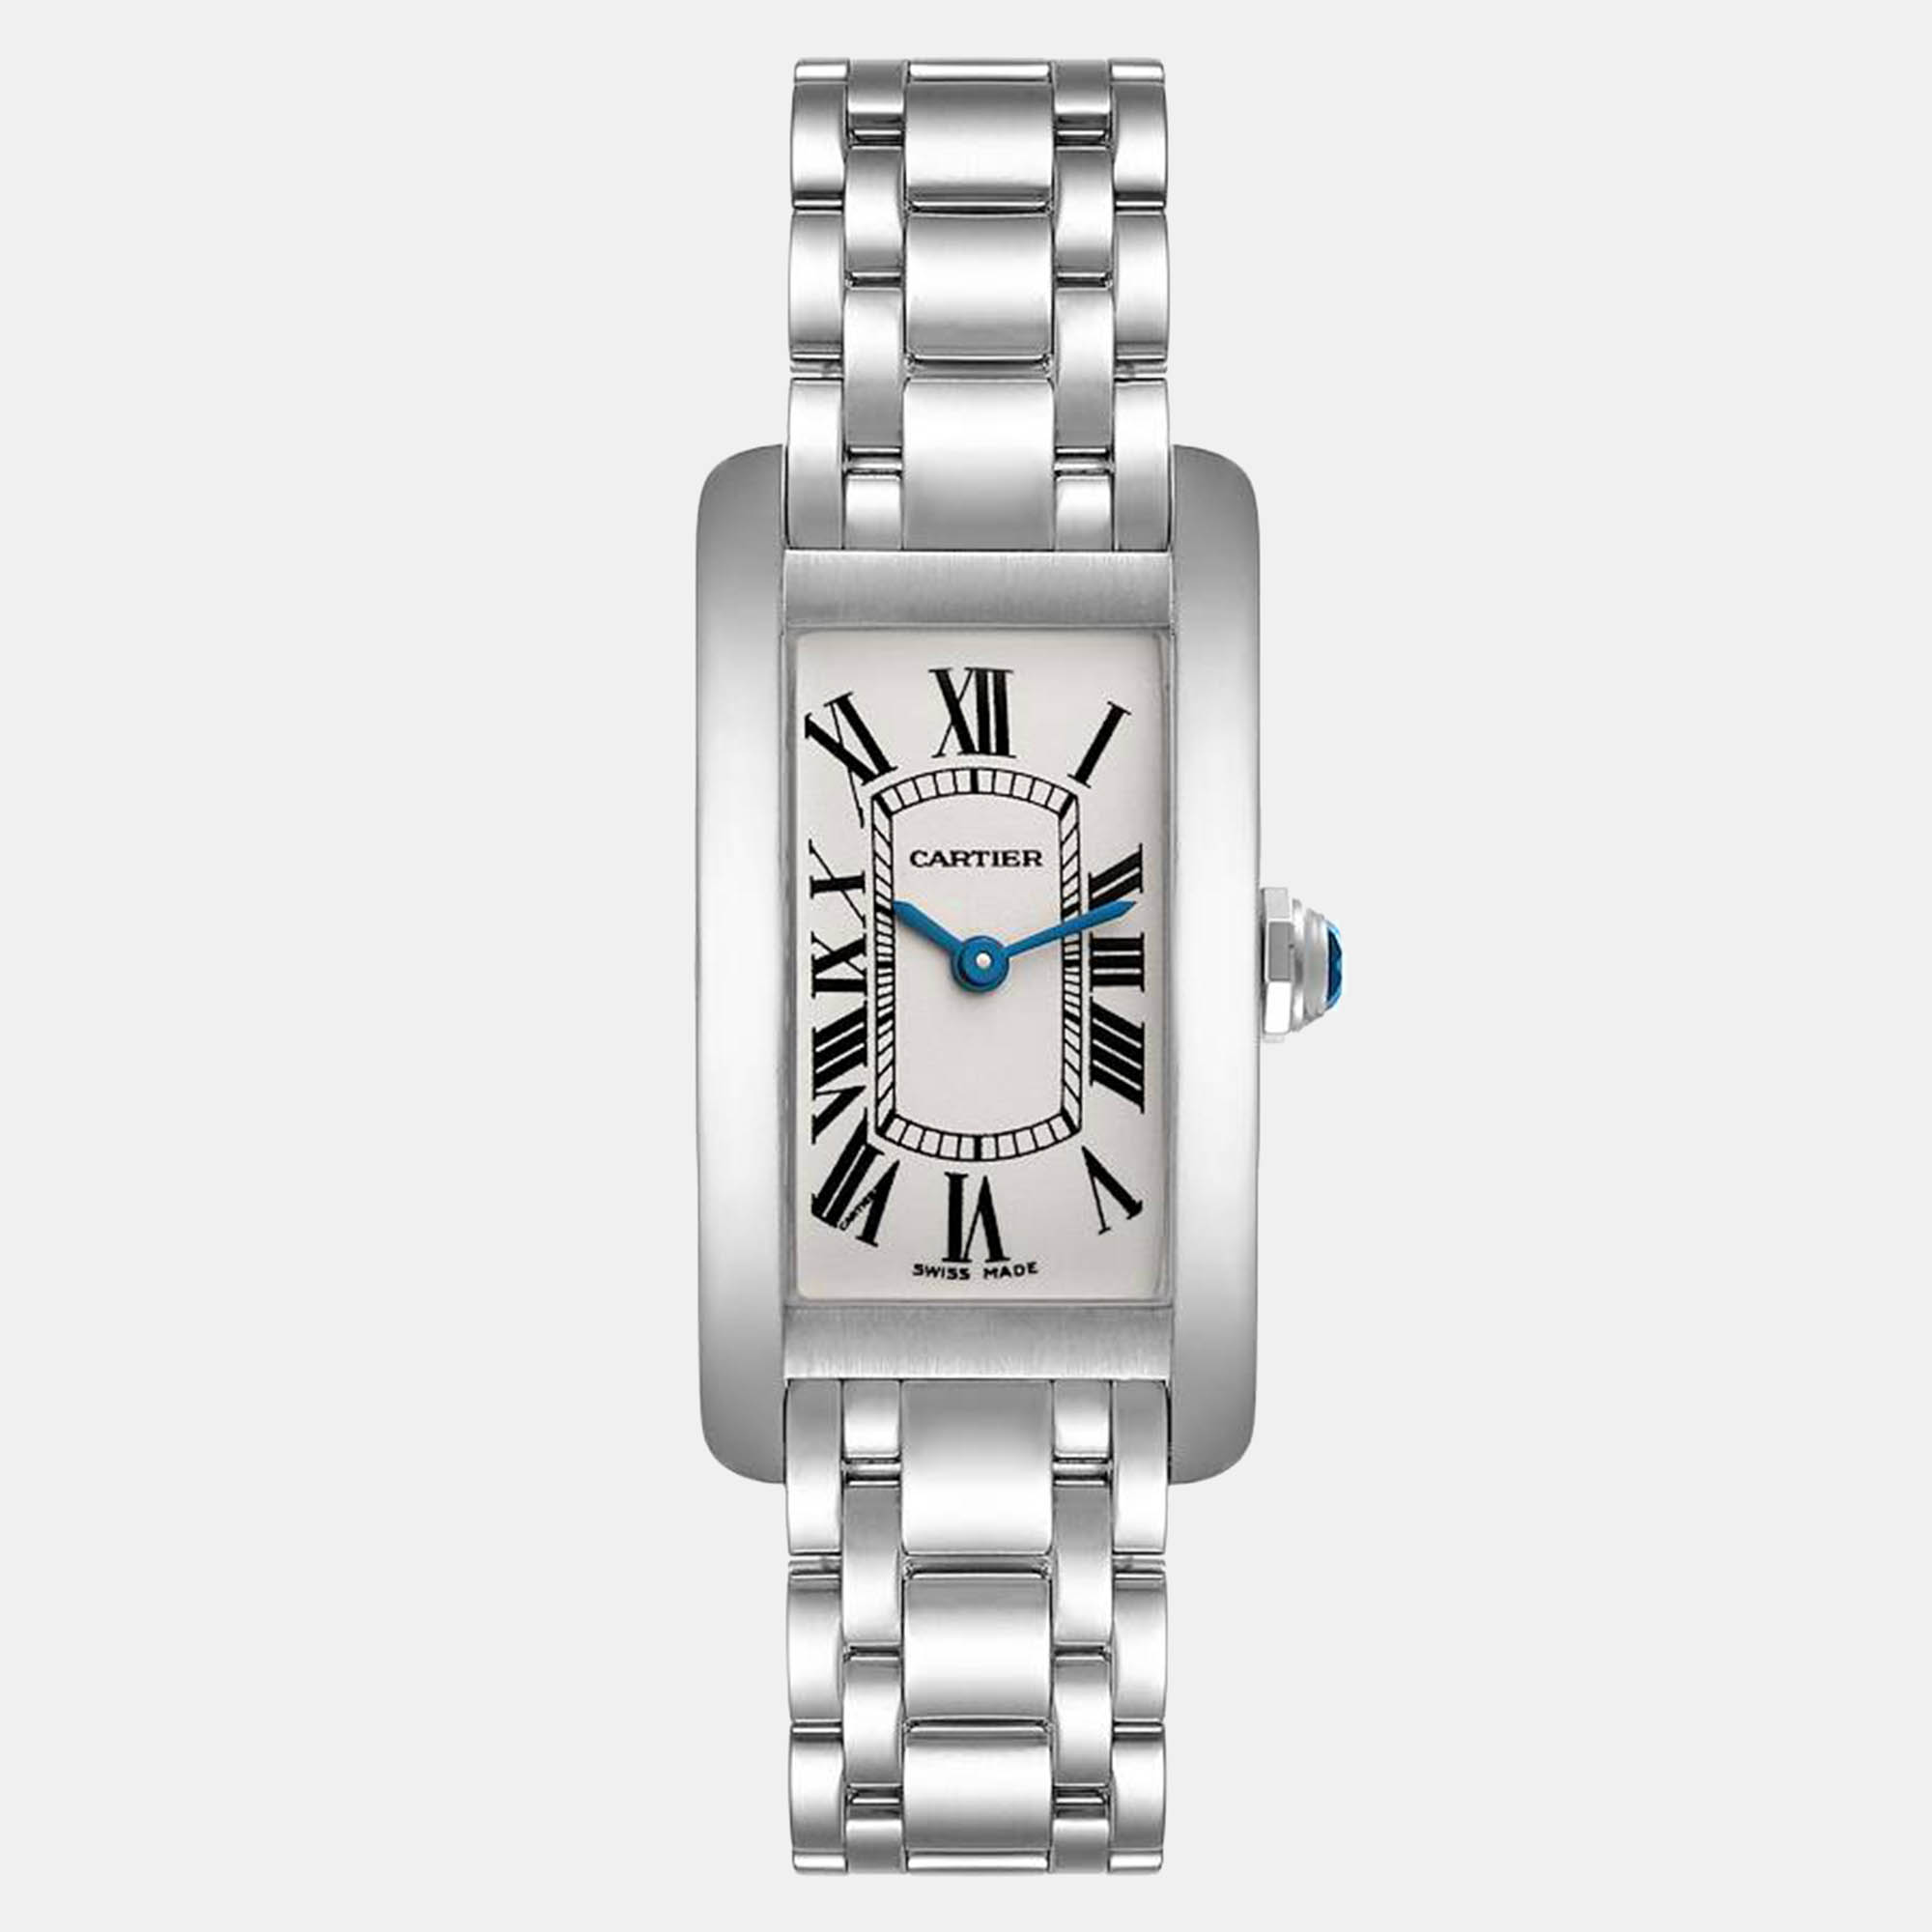 Cartier tank americaine silver dial white gold women's watch w26019l1 19.0 x 35.0 mm